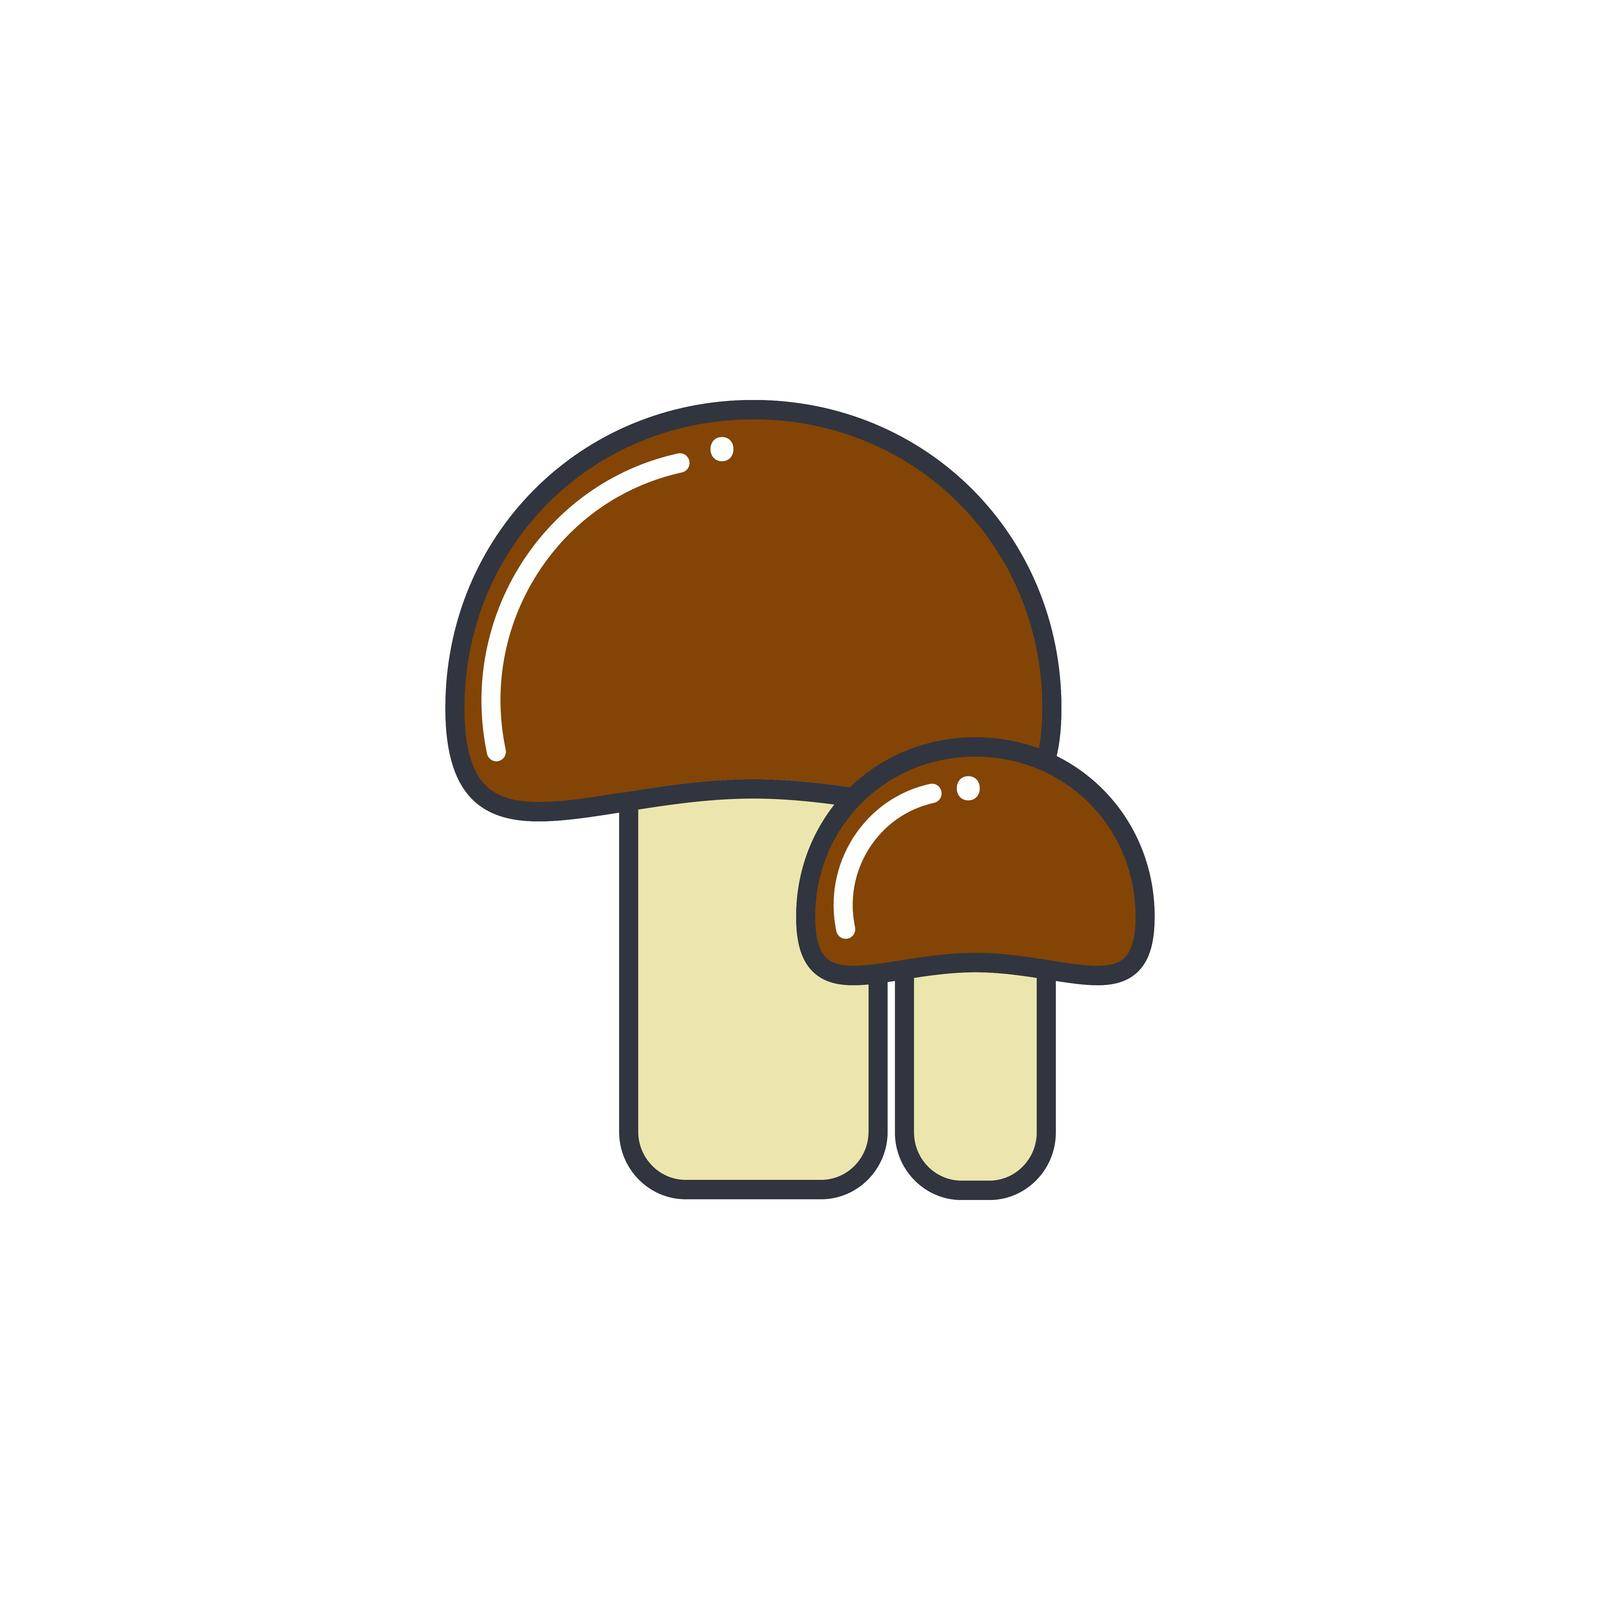 Forest mushrooms boletus isolated object by TassiaK